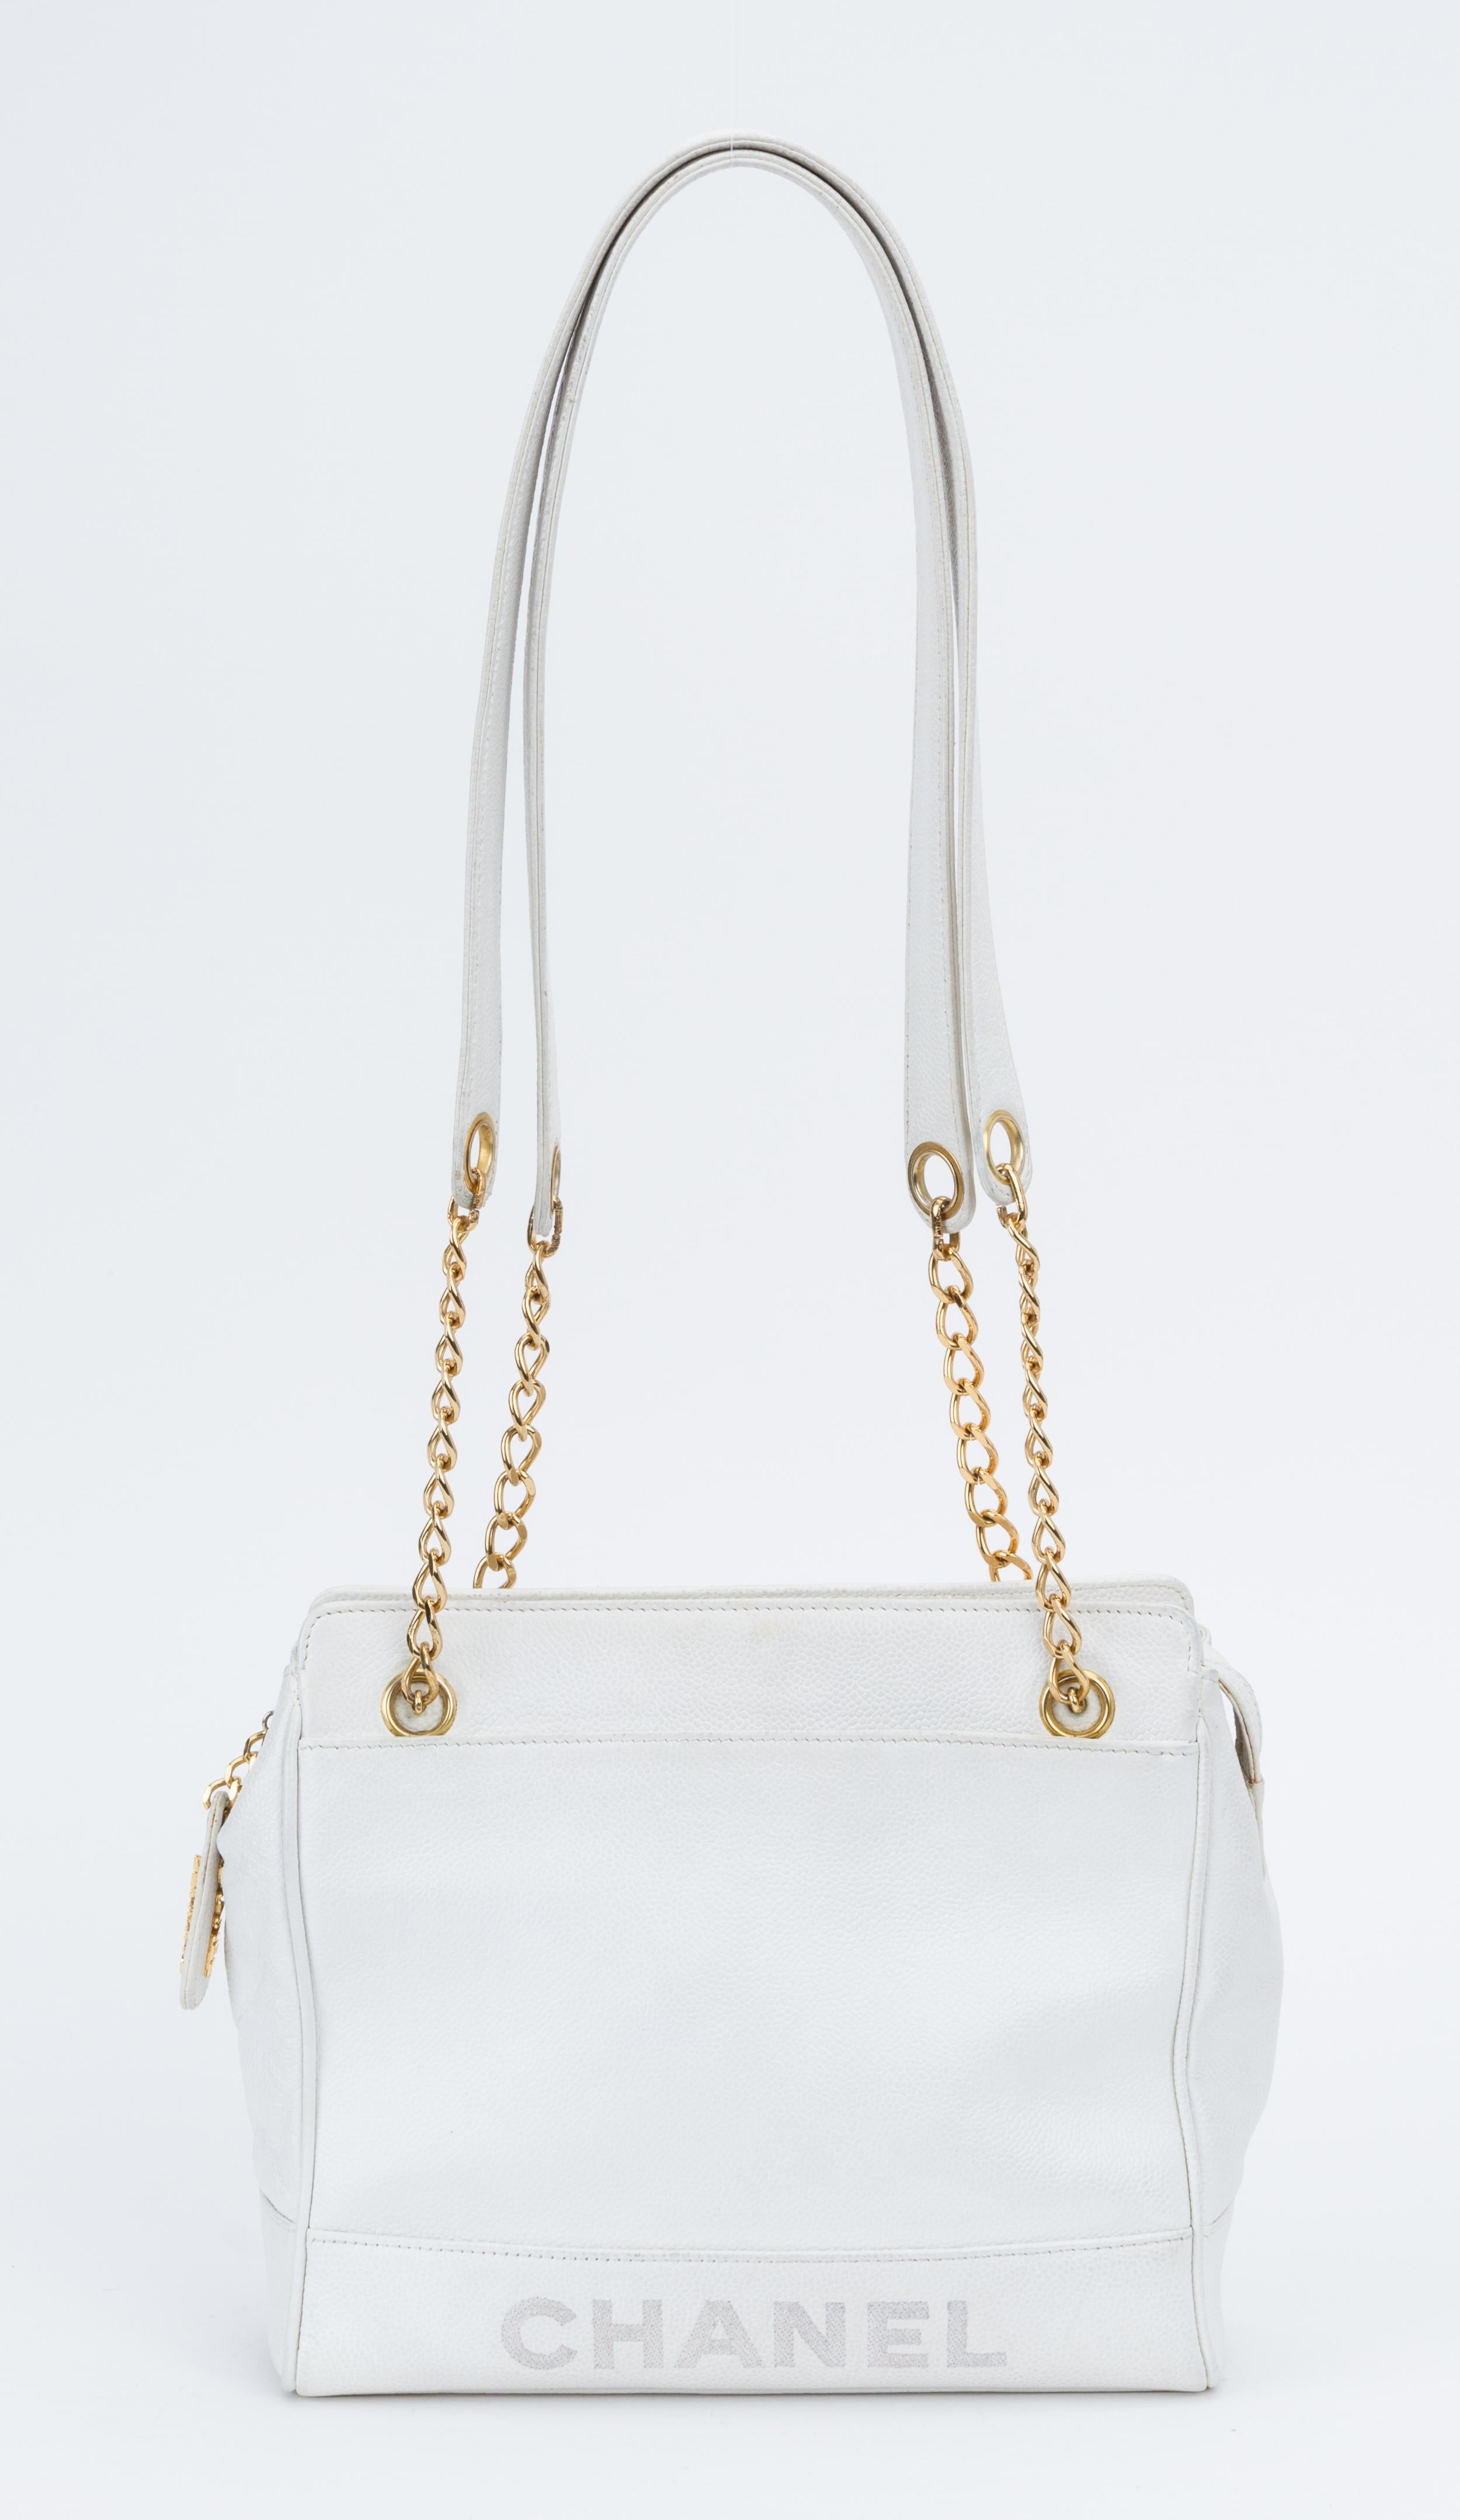 Chanel white caviar leather 90s shoulder bag with gold tone hardware. Excellent exterior. Shoulder drop 16